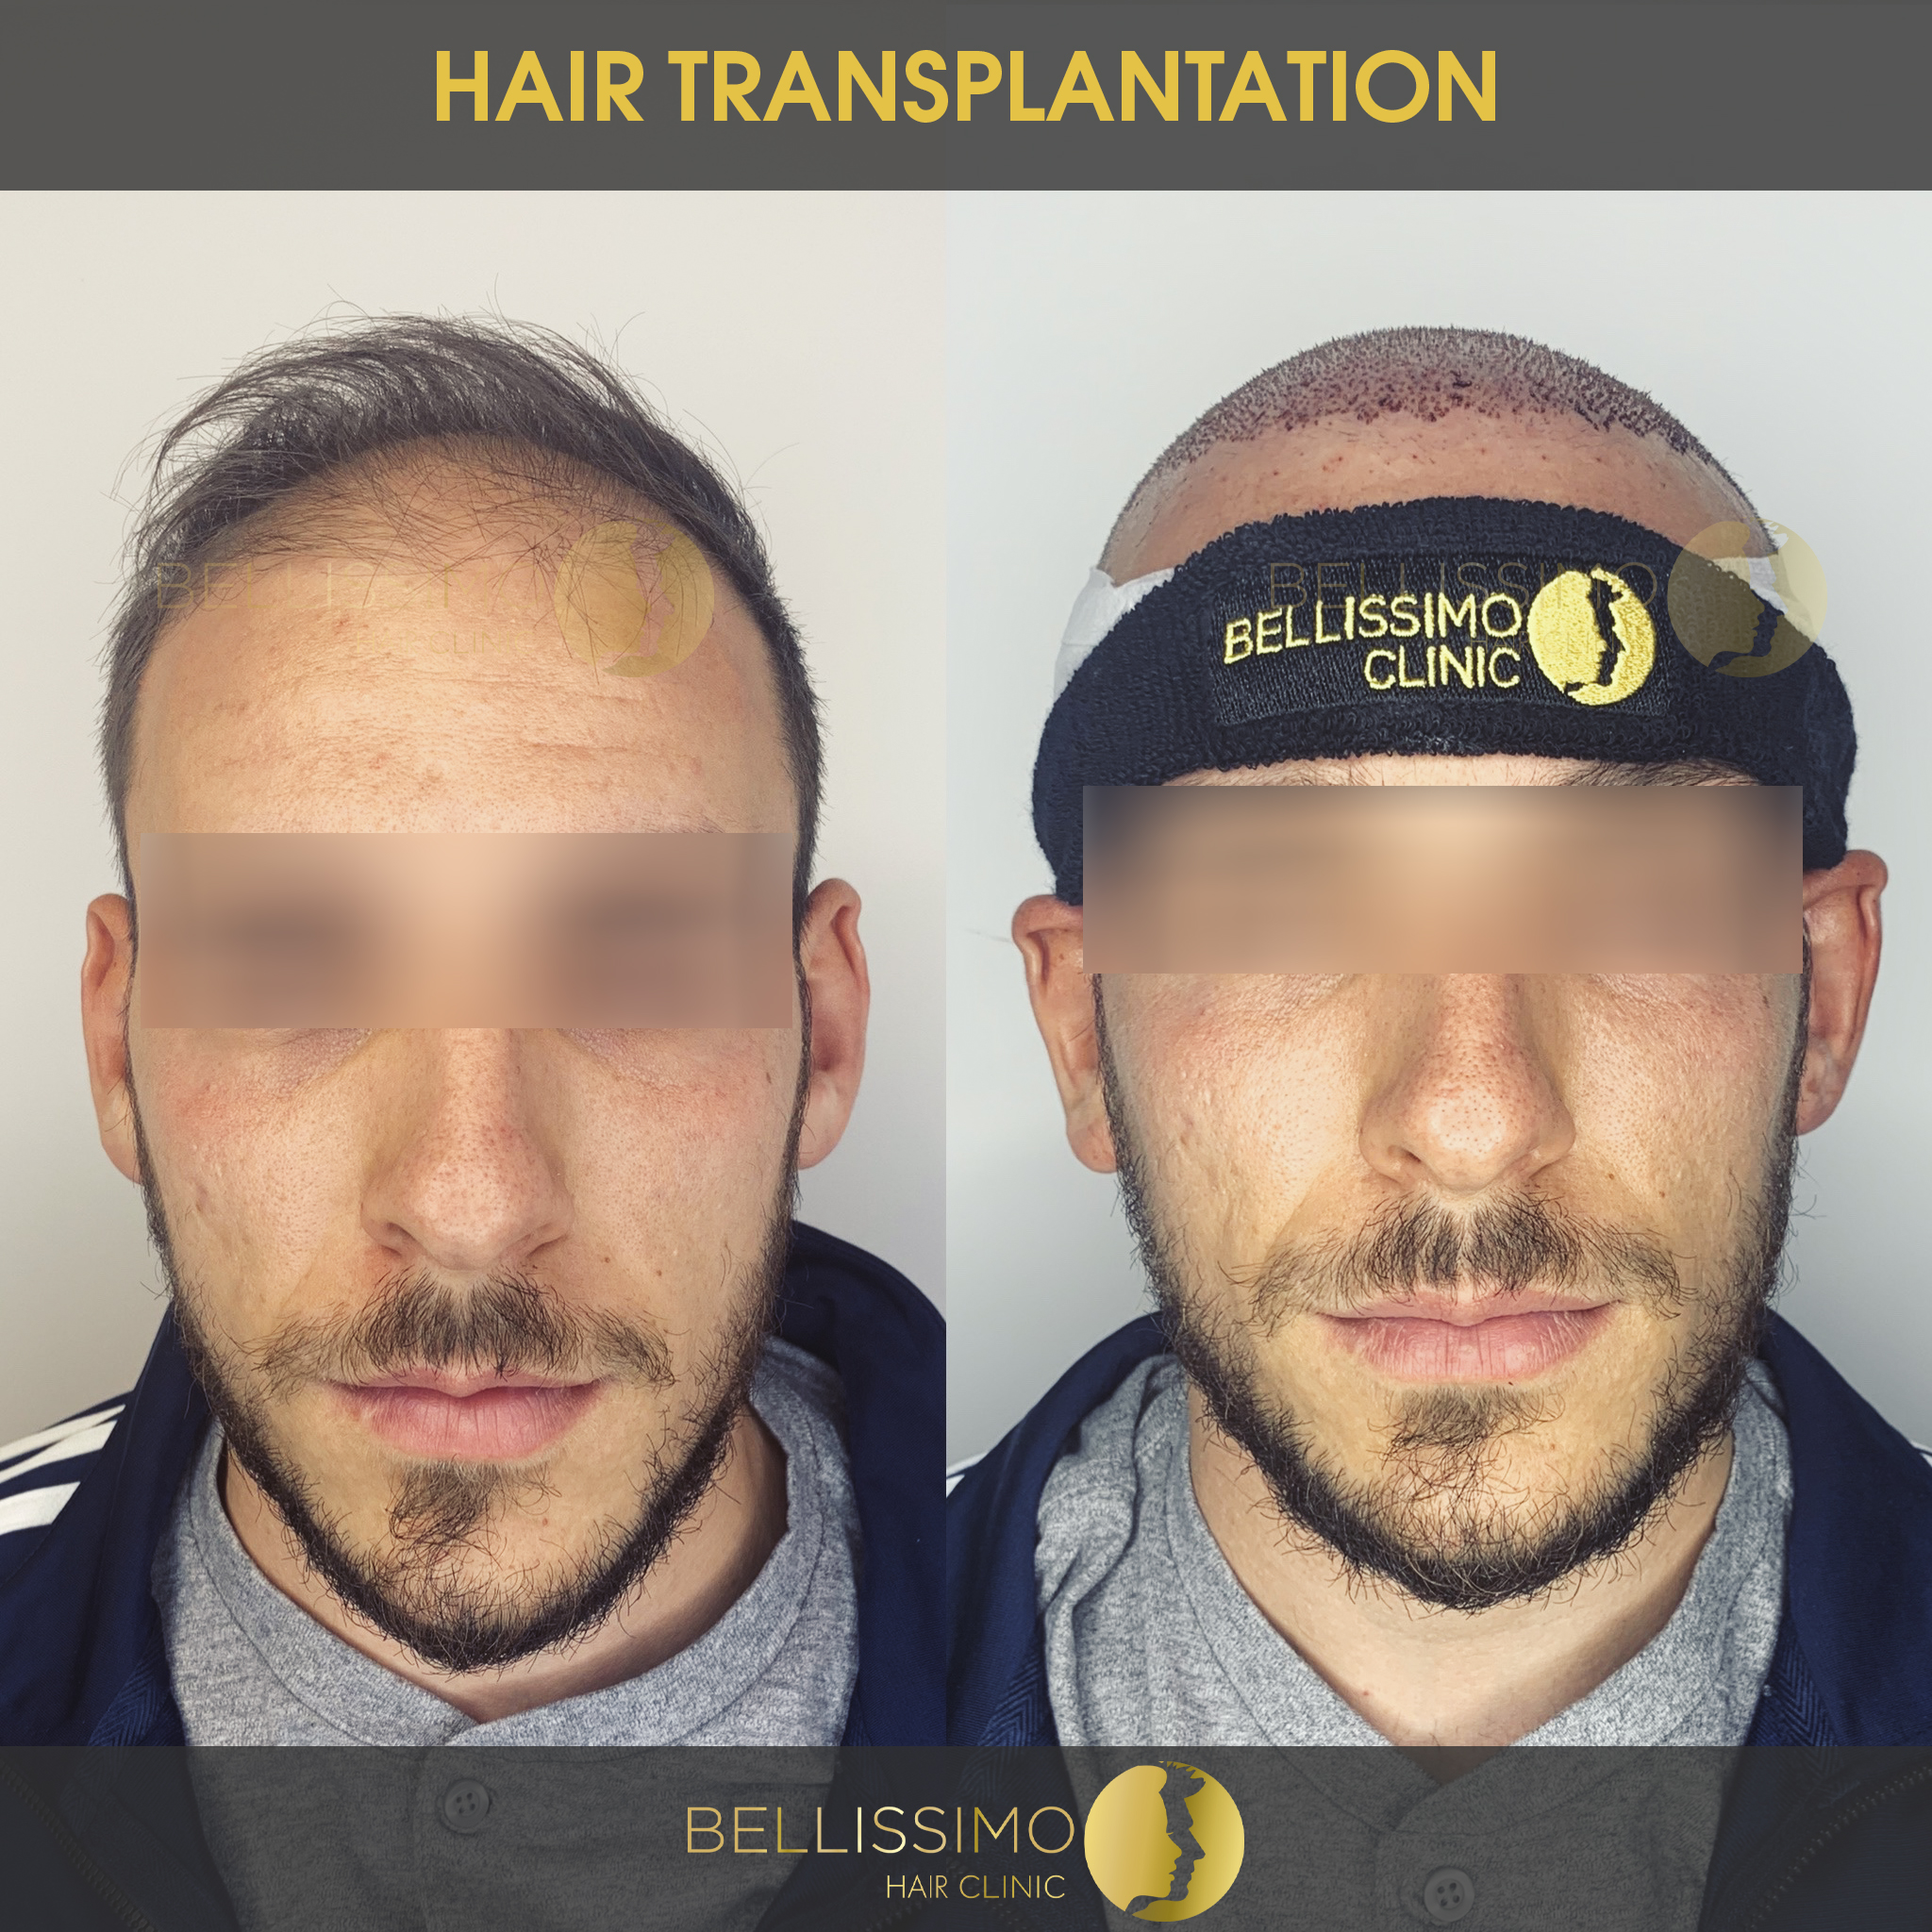 Hair transplantation - Bellissimo clinic